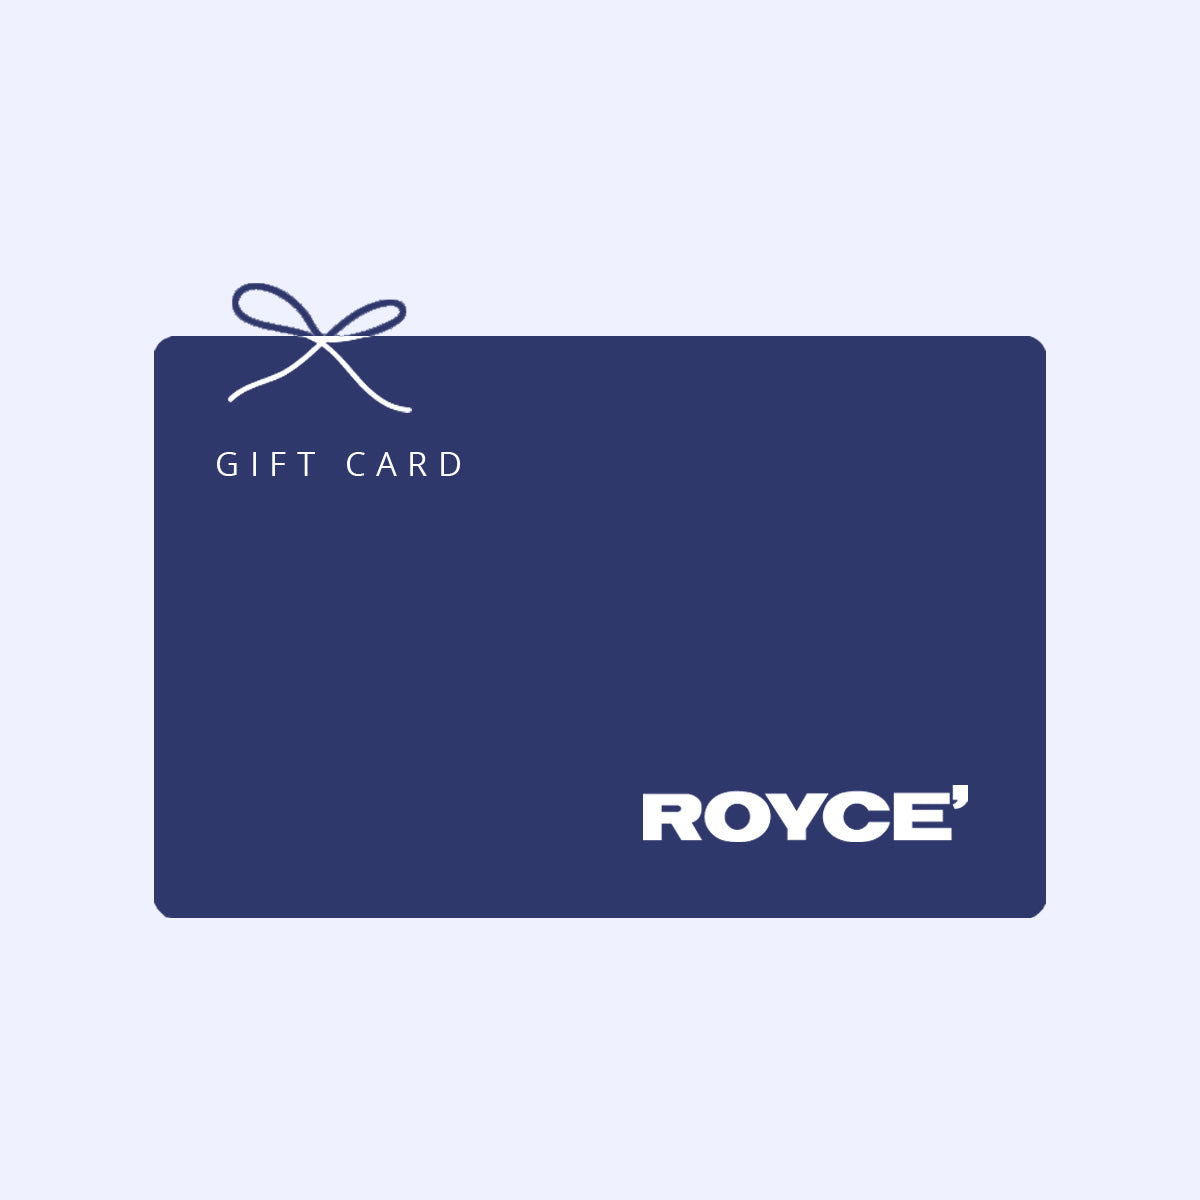 ROYCE' Chocolate Gift Card